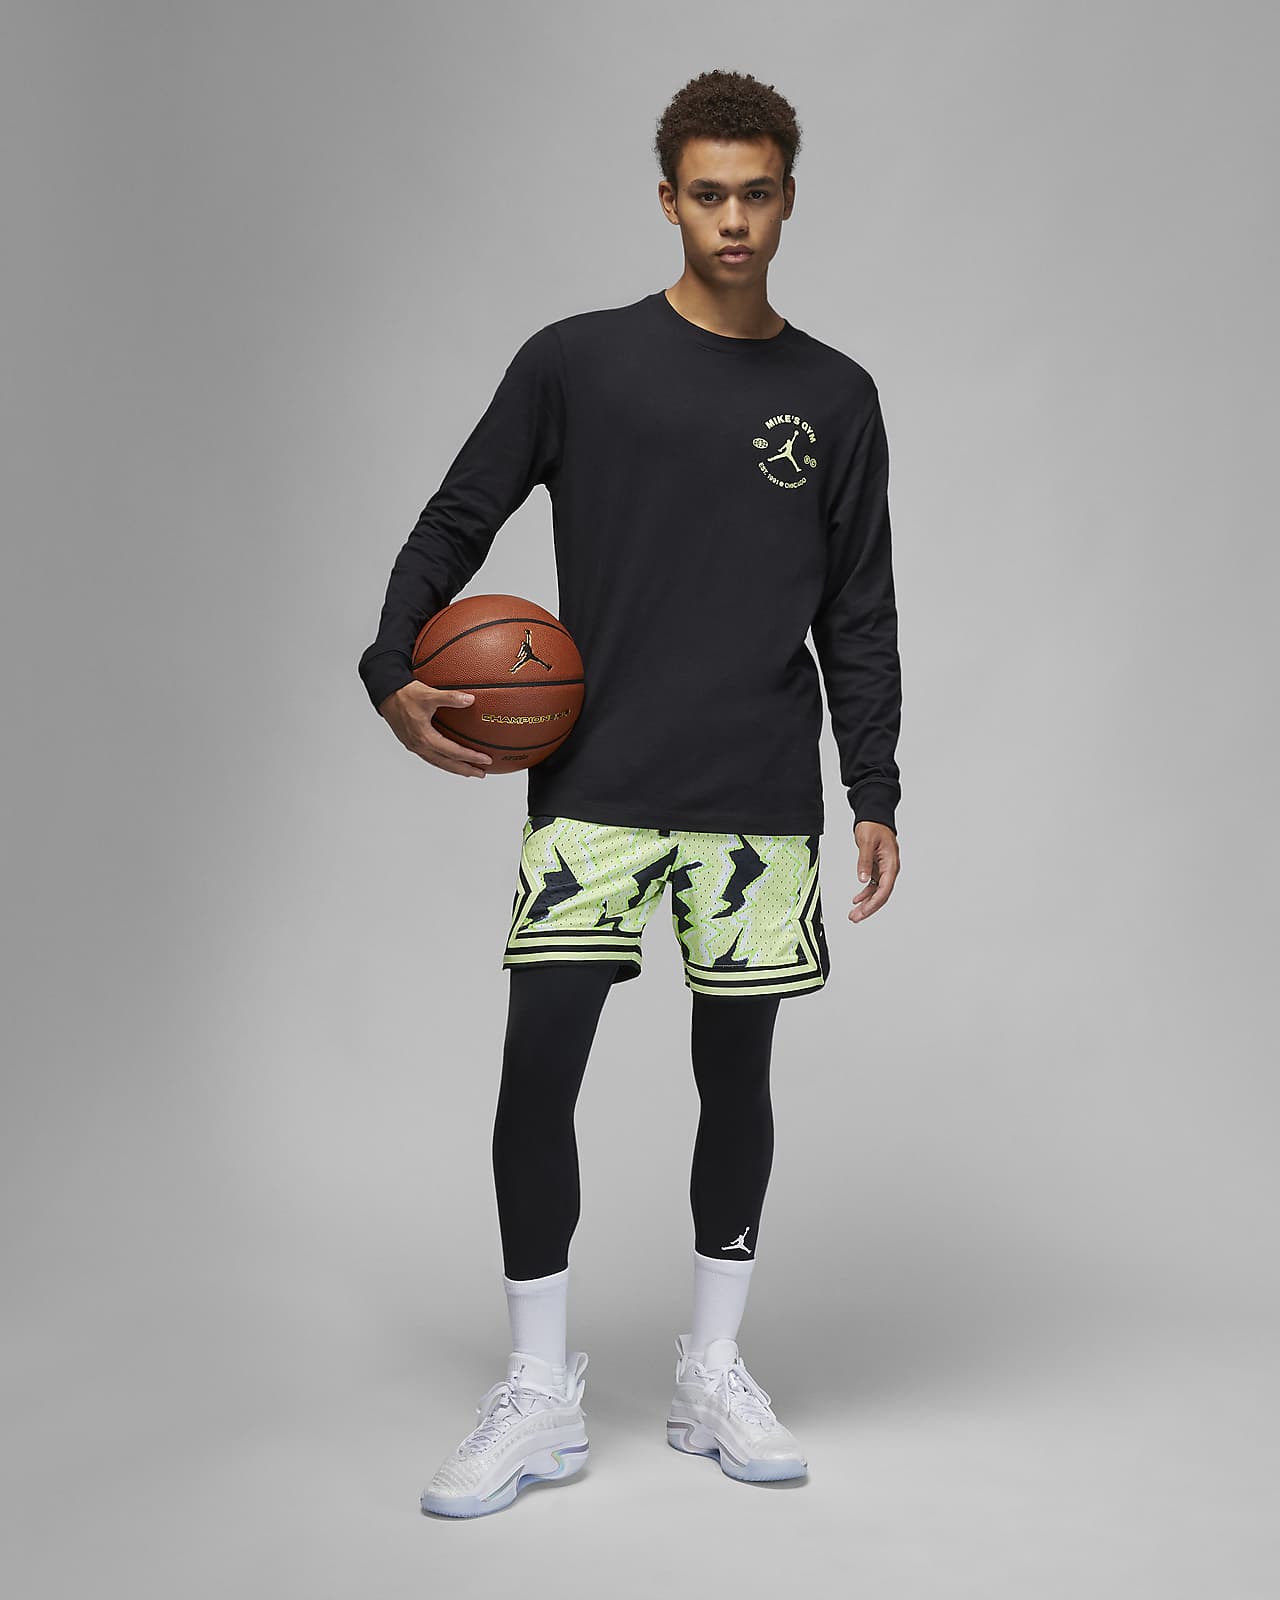 Nike NBA Player Mens Basketball 3/4 Compression Pants Tights Black/White  NEW